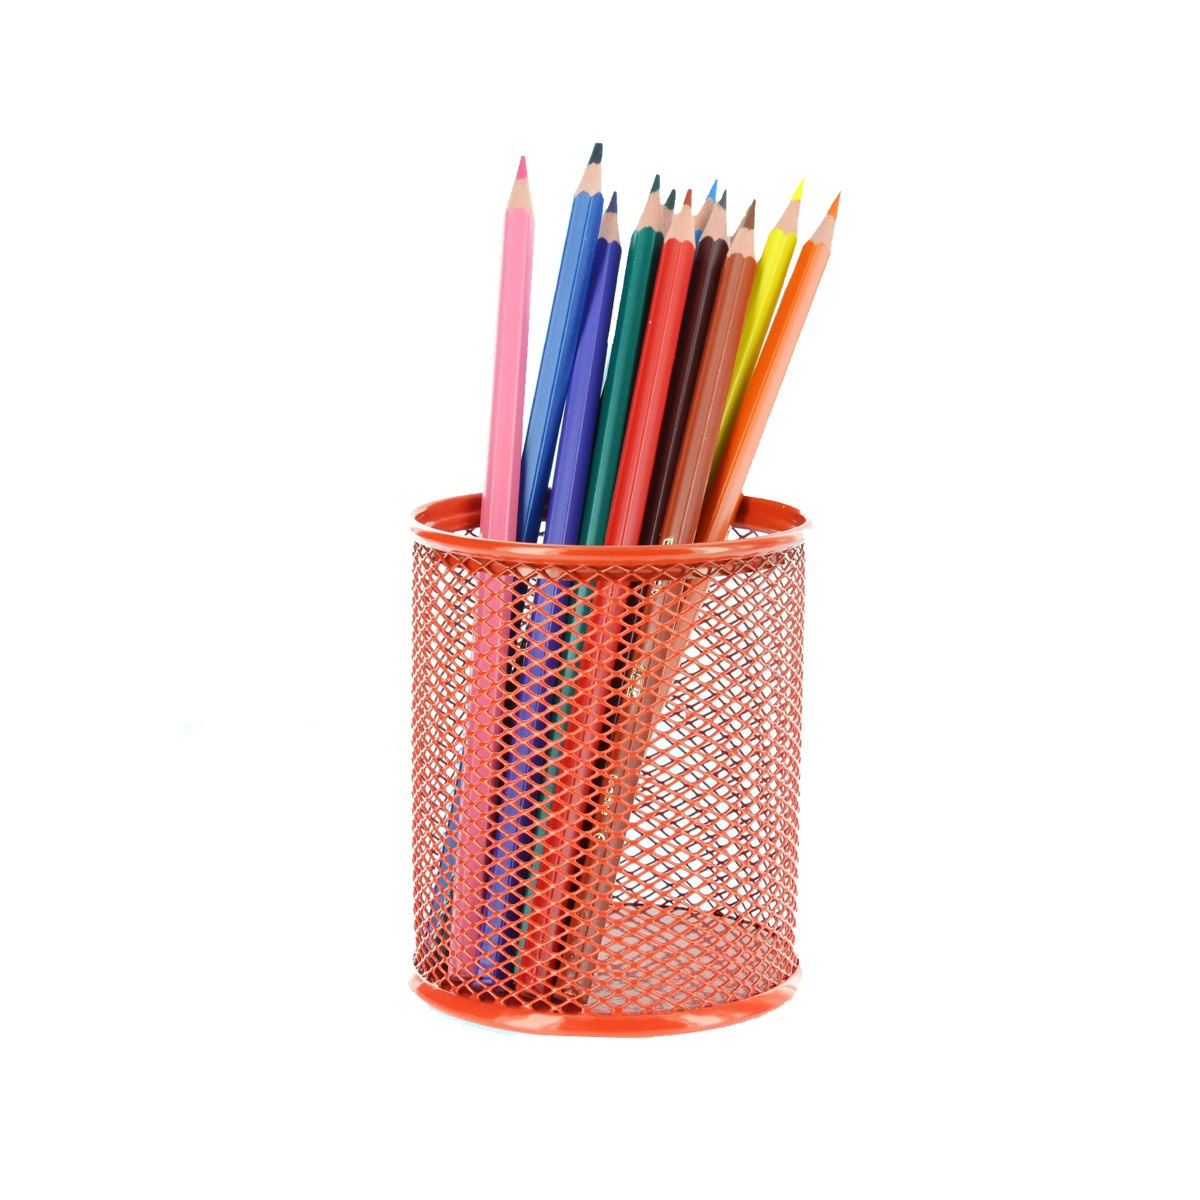 34 pot a crayons en maille metallique rouge orange